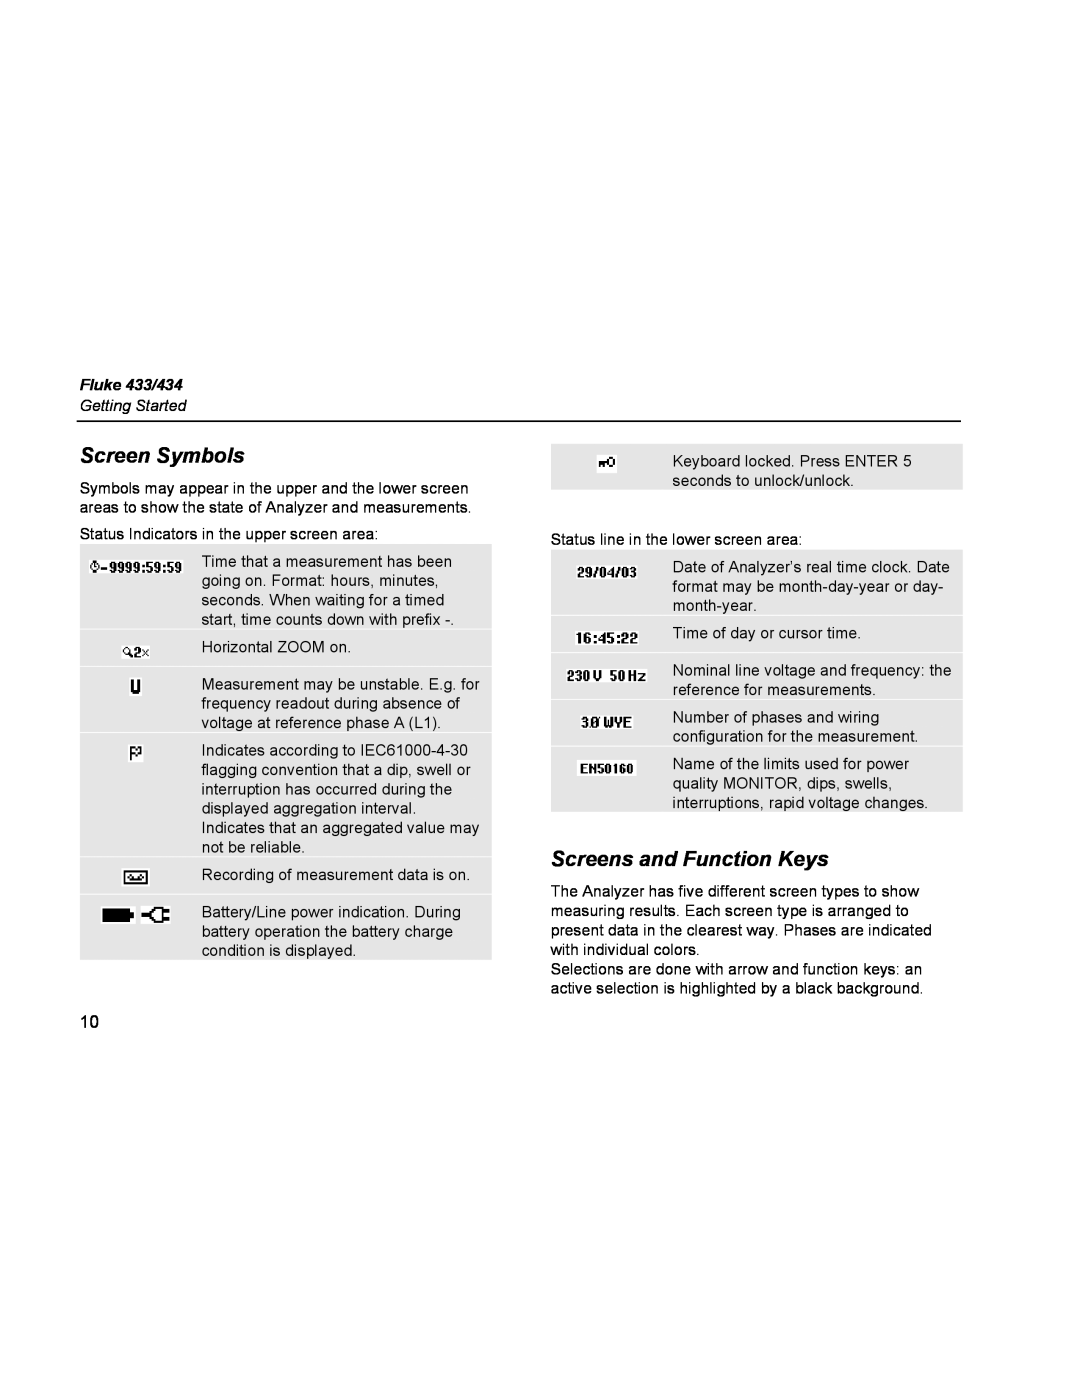 Fluke manual Screen Symbols, Screens and Function Keys, Fluke 433/434 